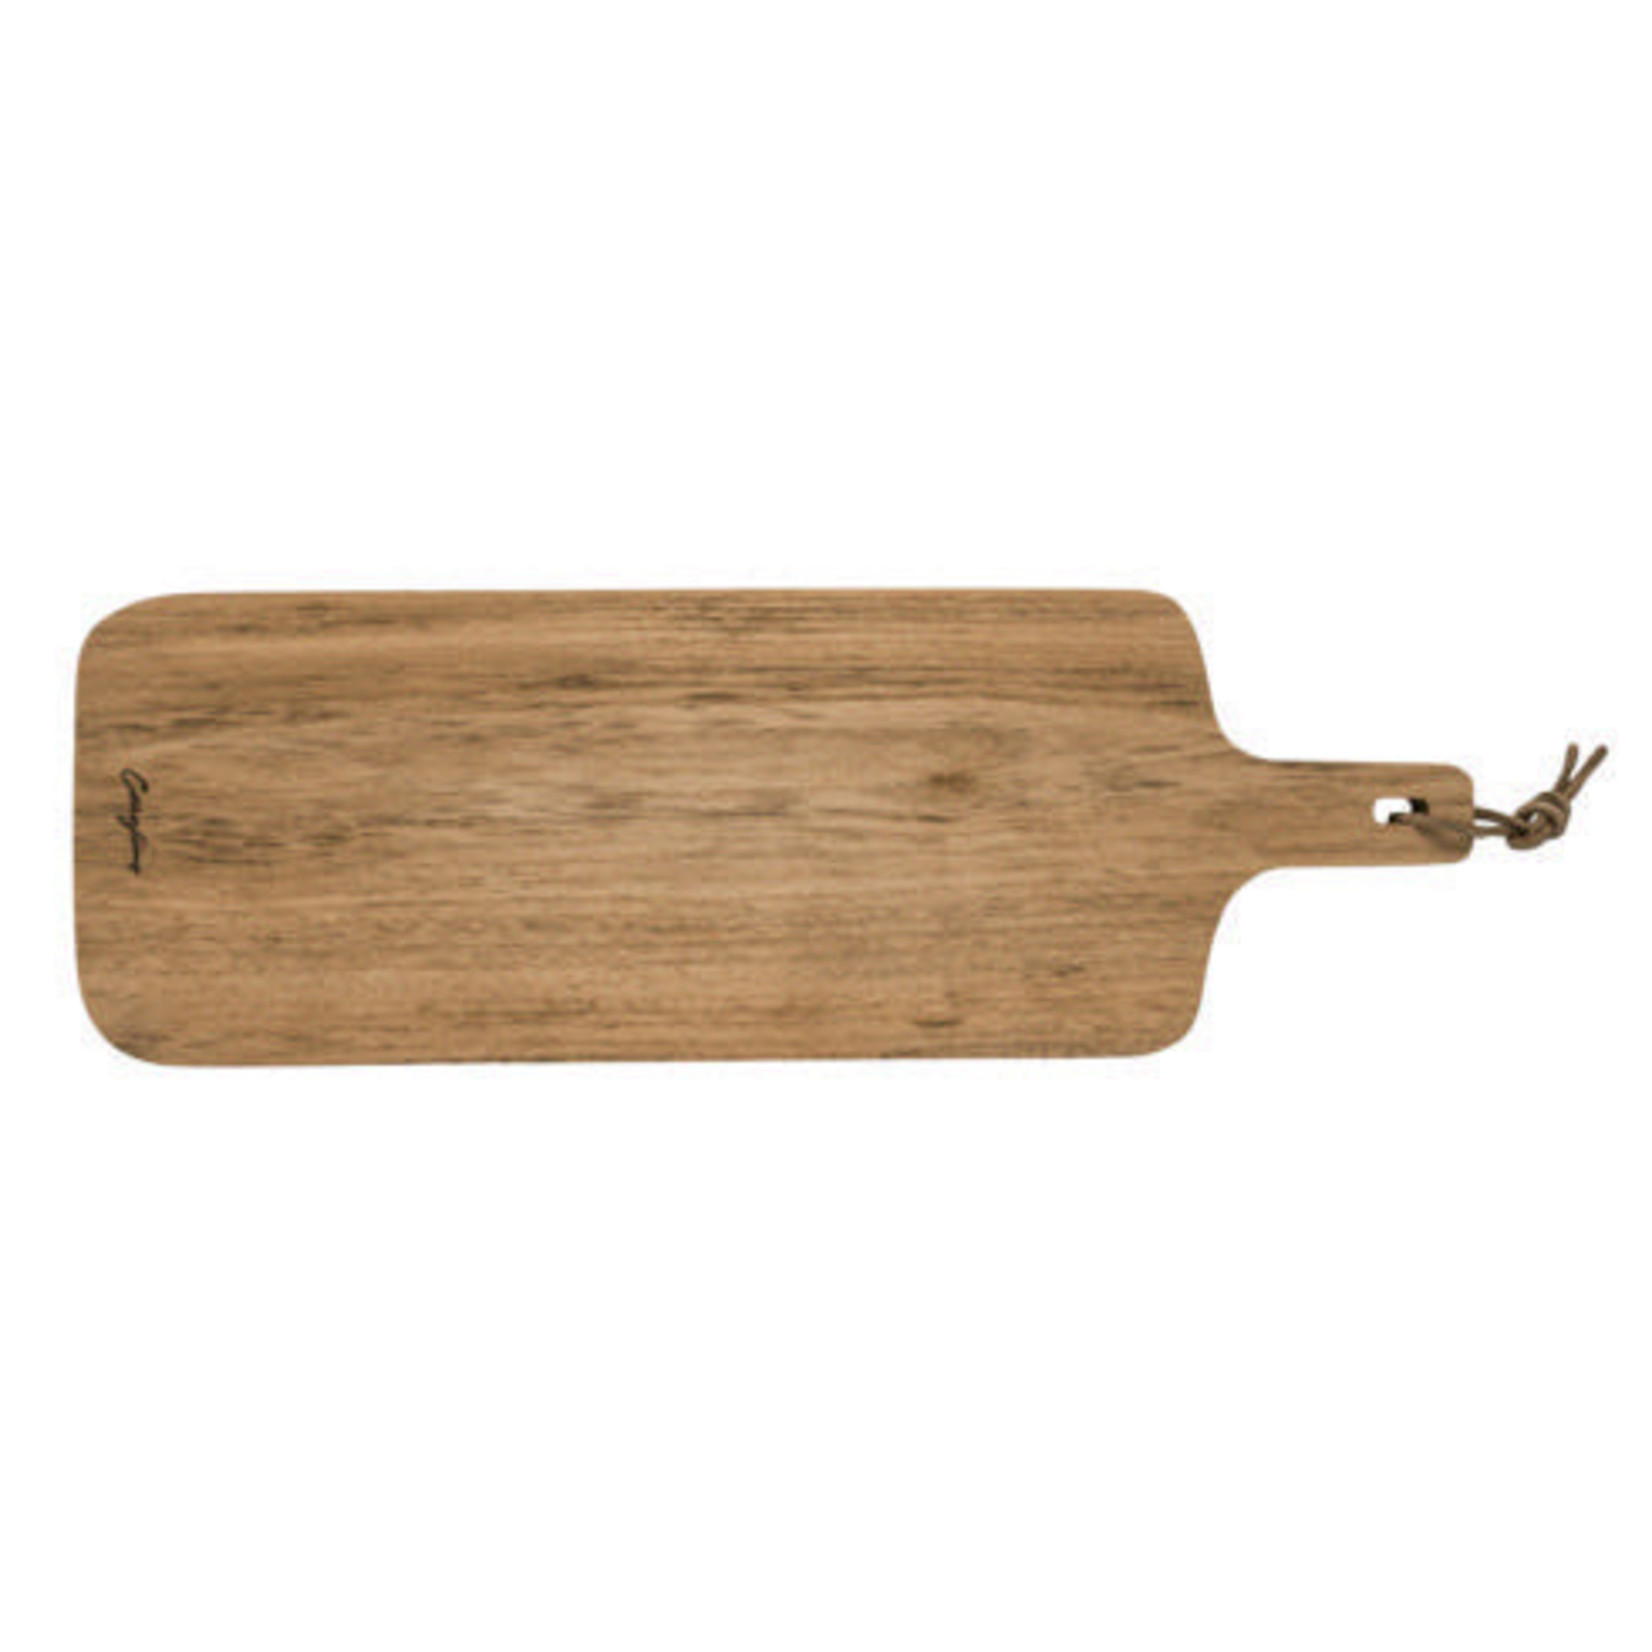 CASAFINA CASAFINA Oak Wood Serving Board w/Handle 54cm